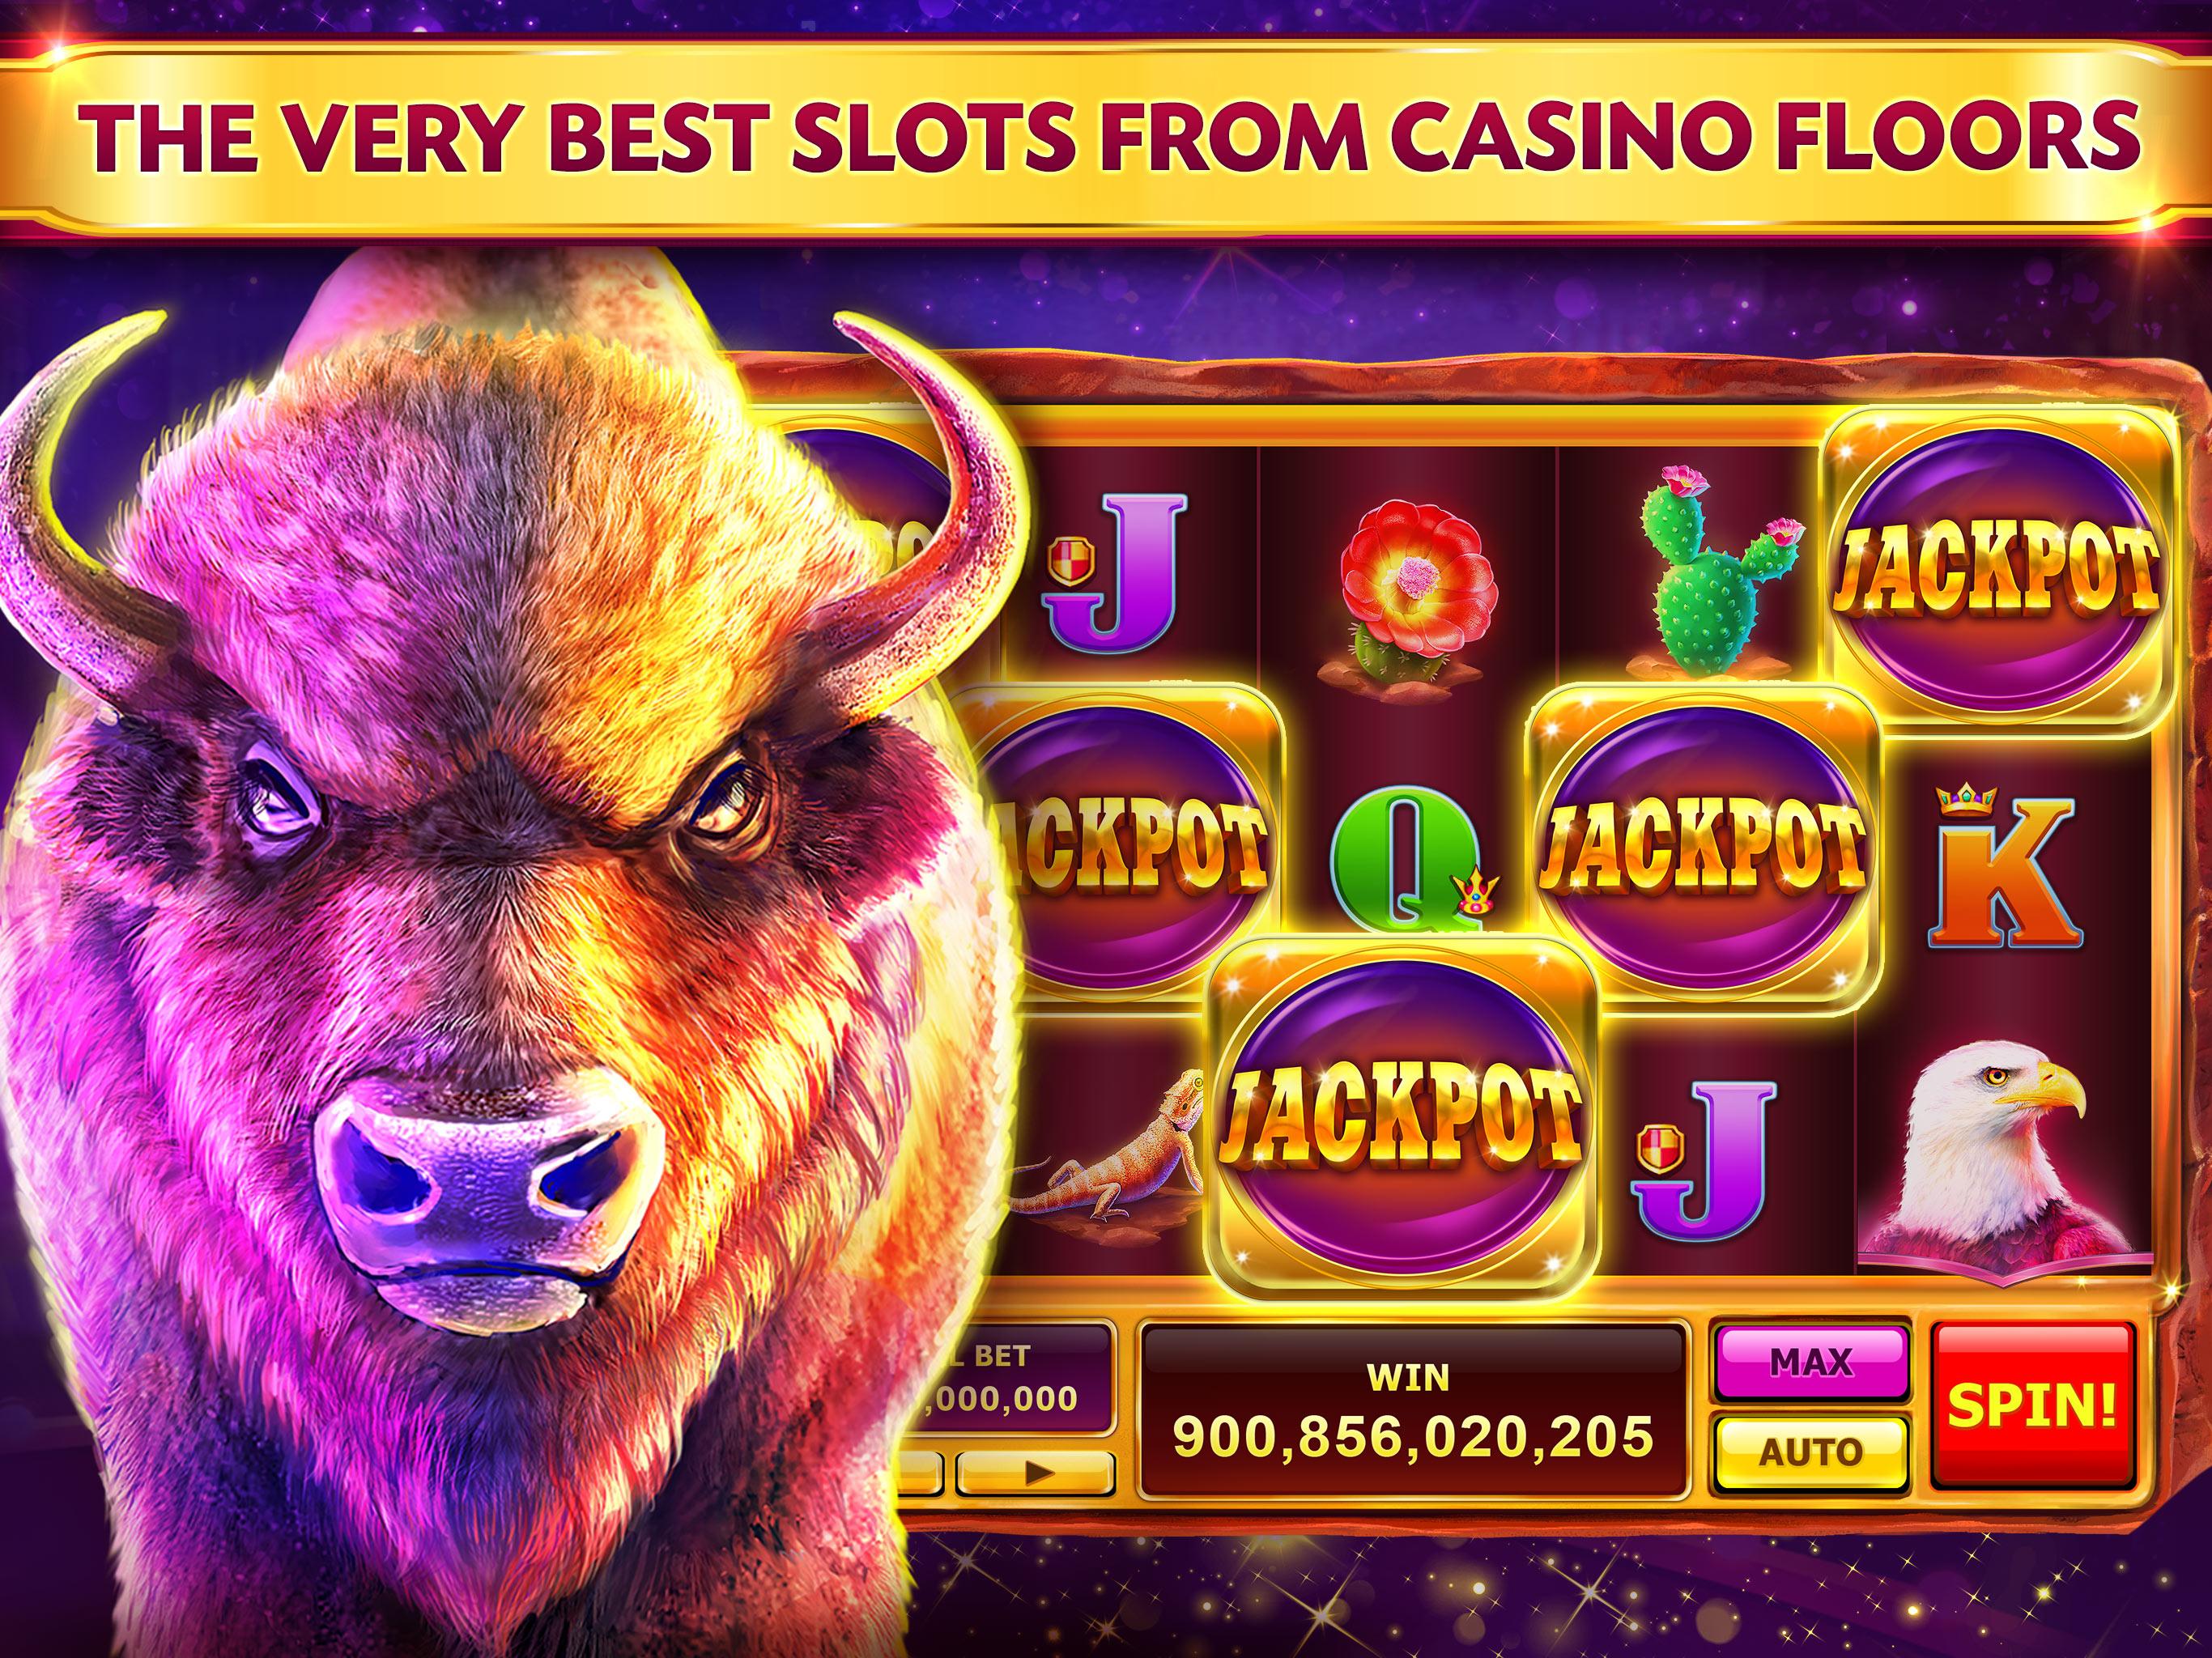 Download Casino Slot Games